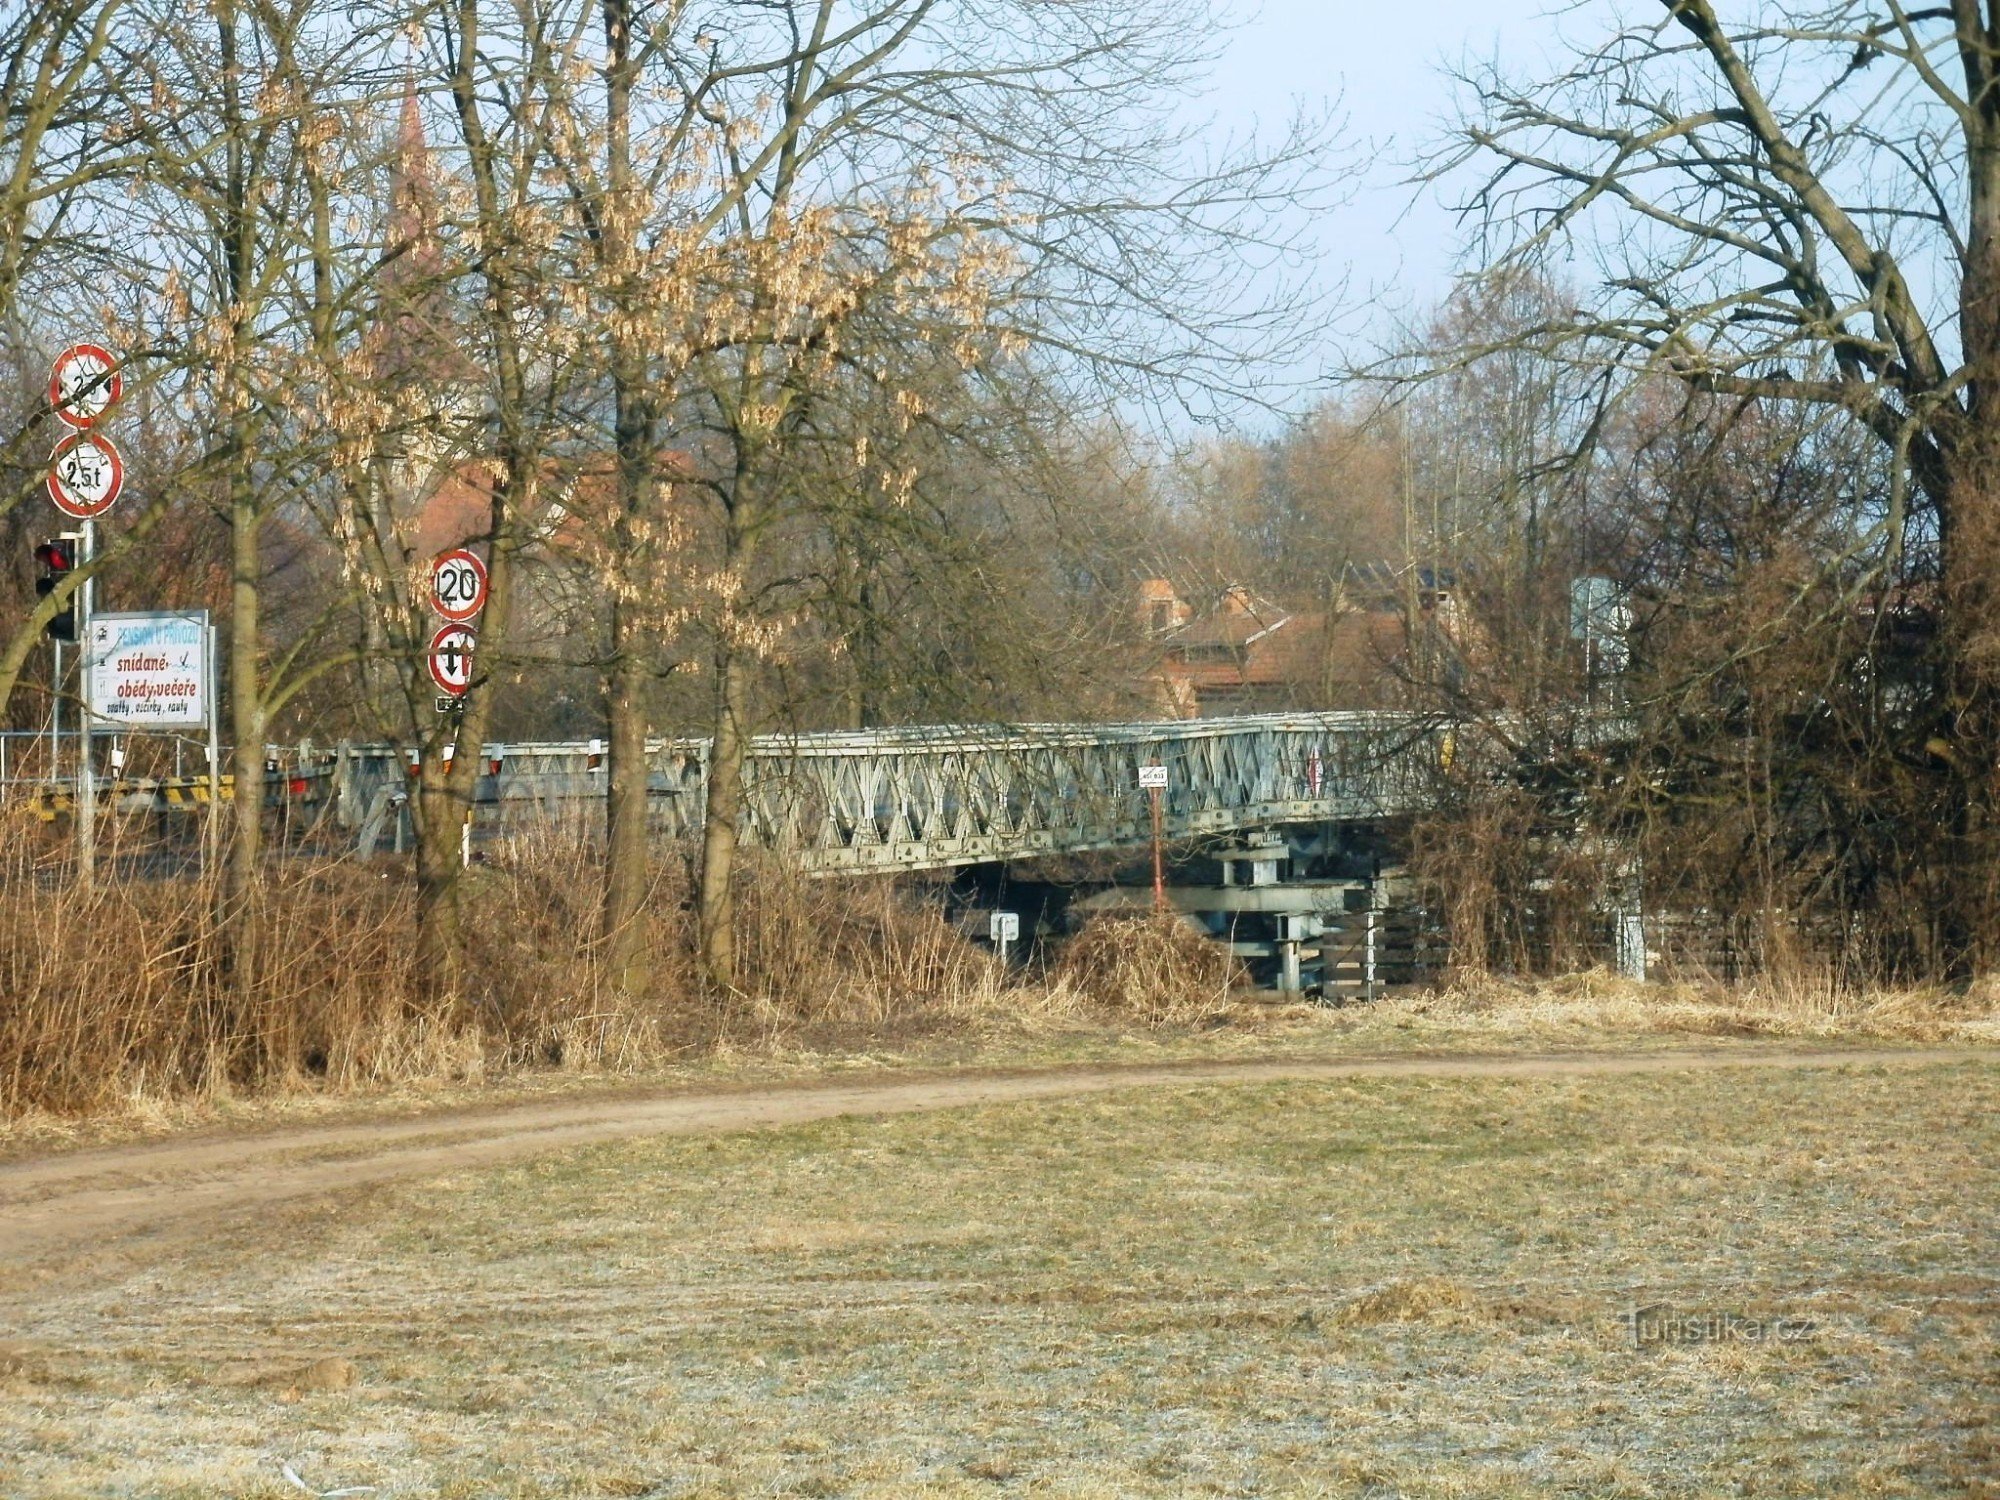 Kunetice - pont de fer